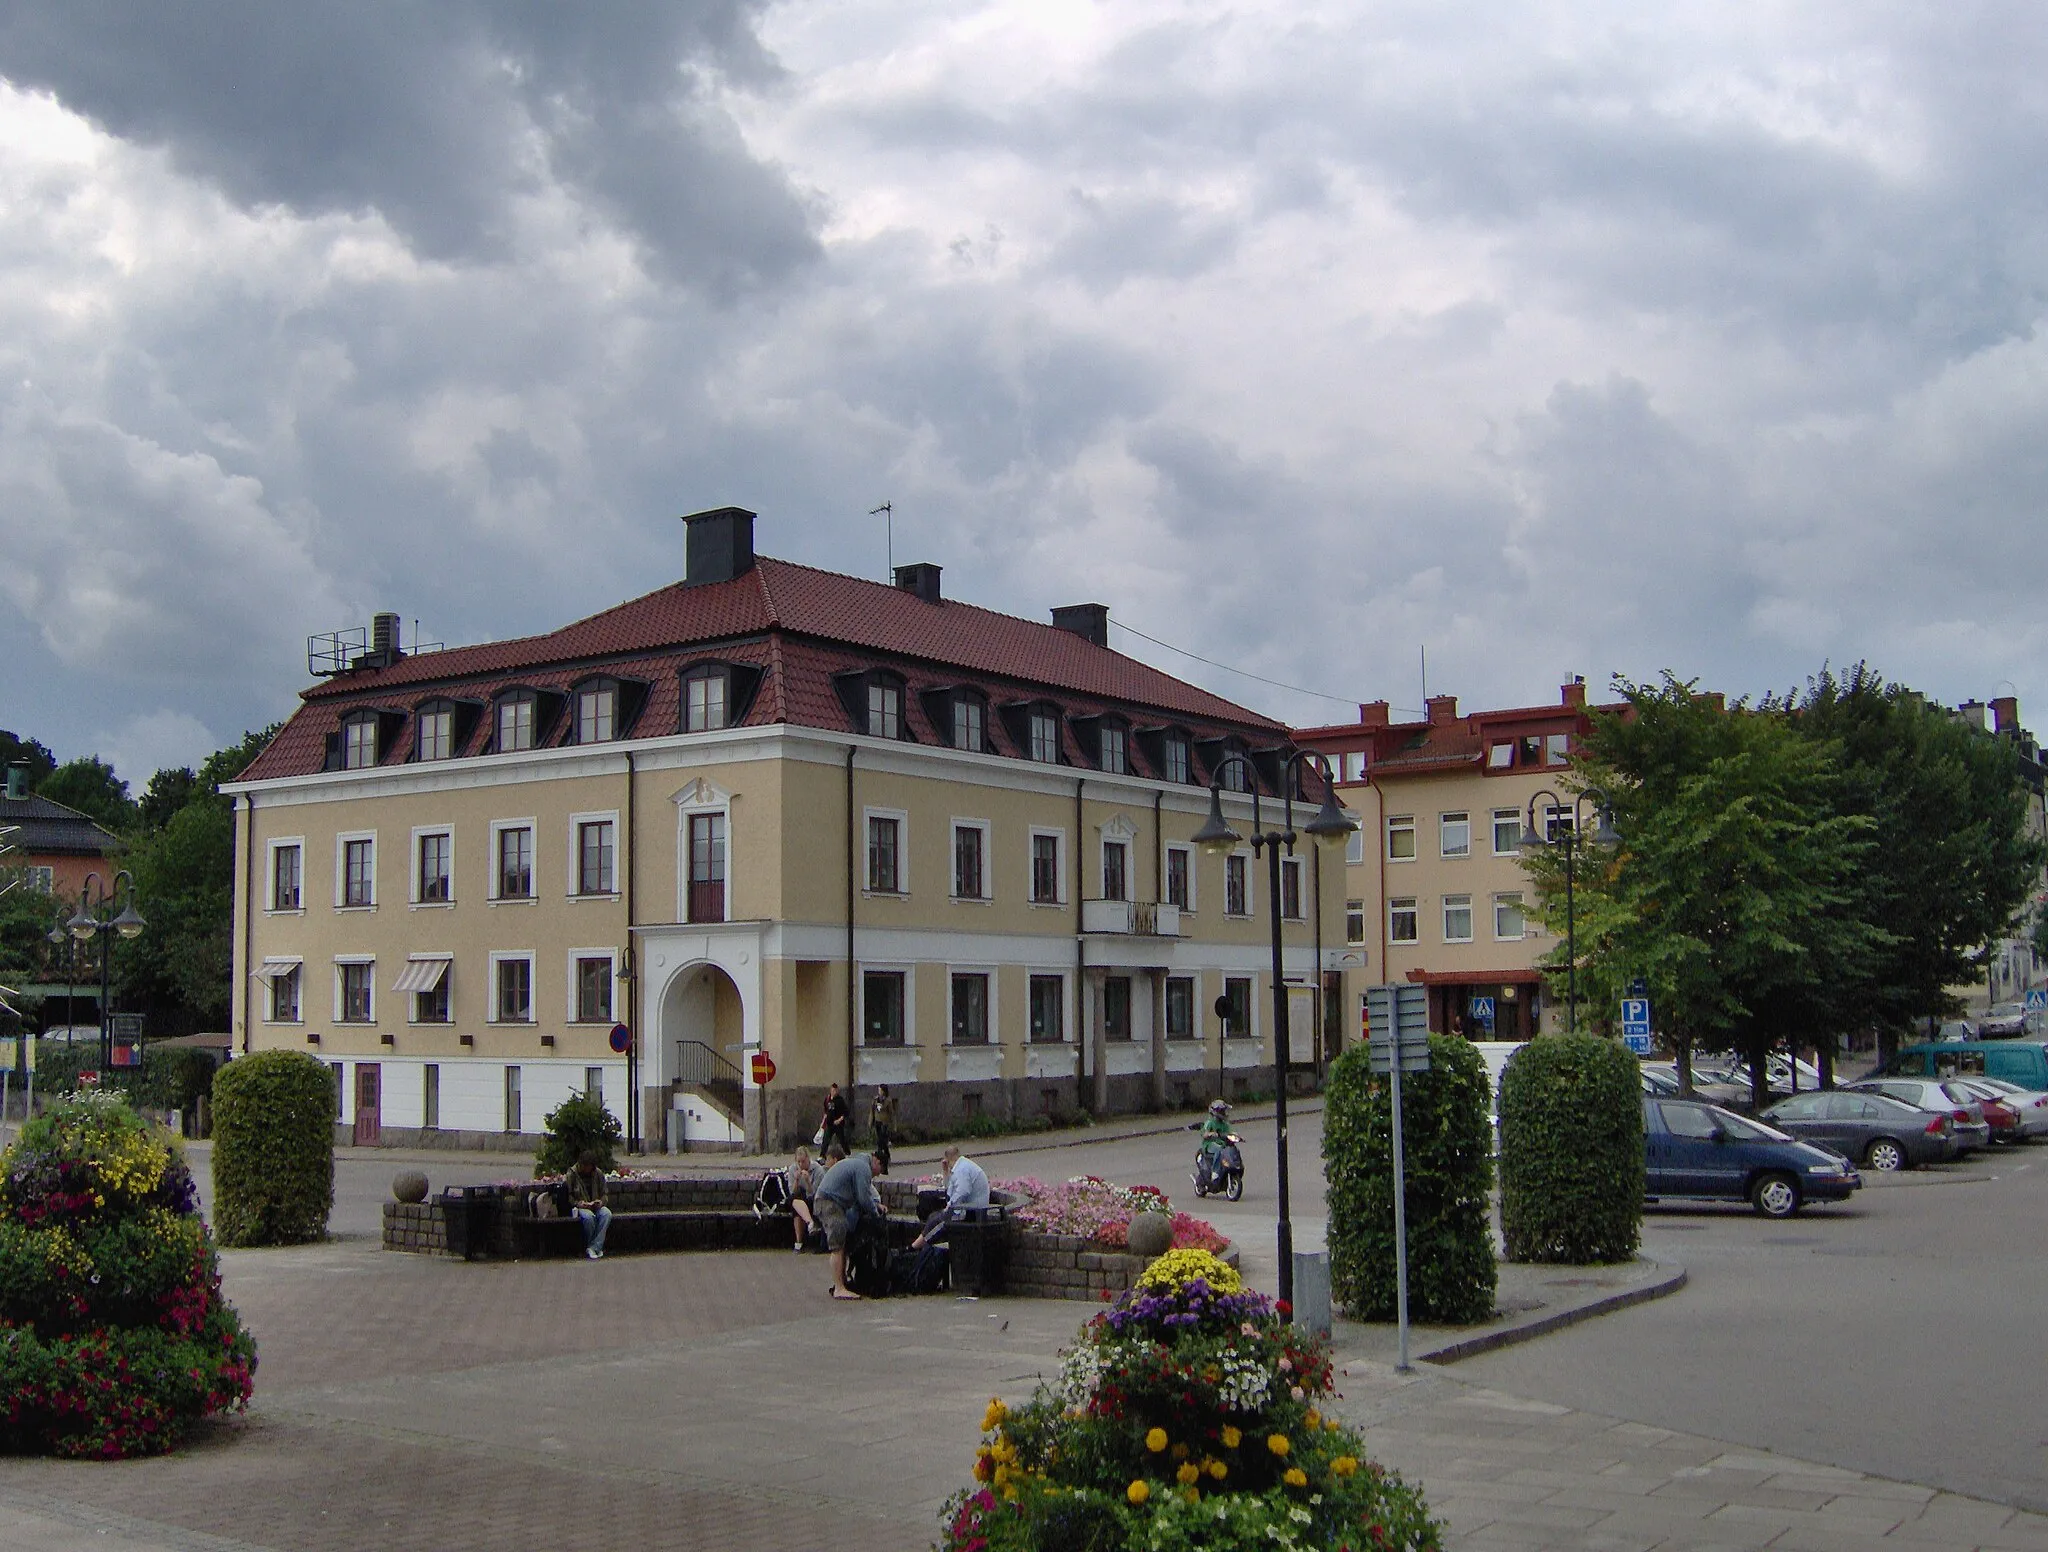 Photo showing: Central Alvesta, Alvesta Municipality in Kronoberg County, Sweden